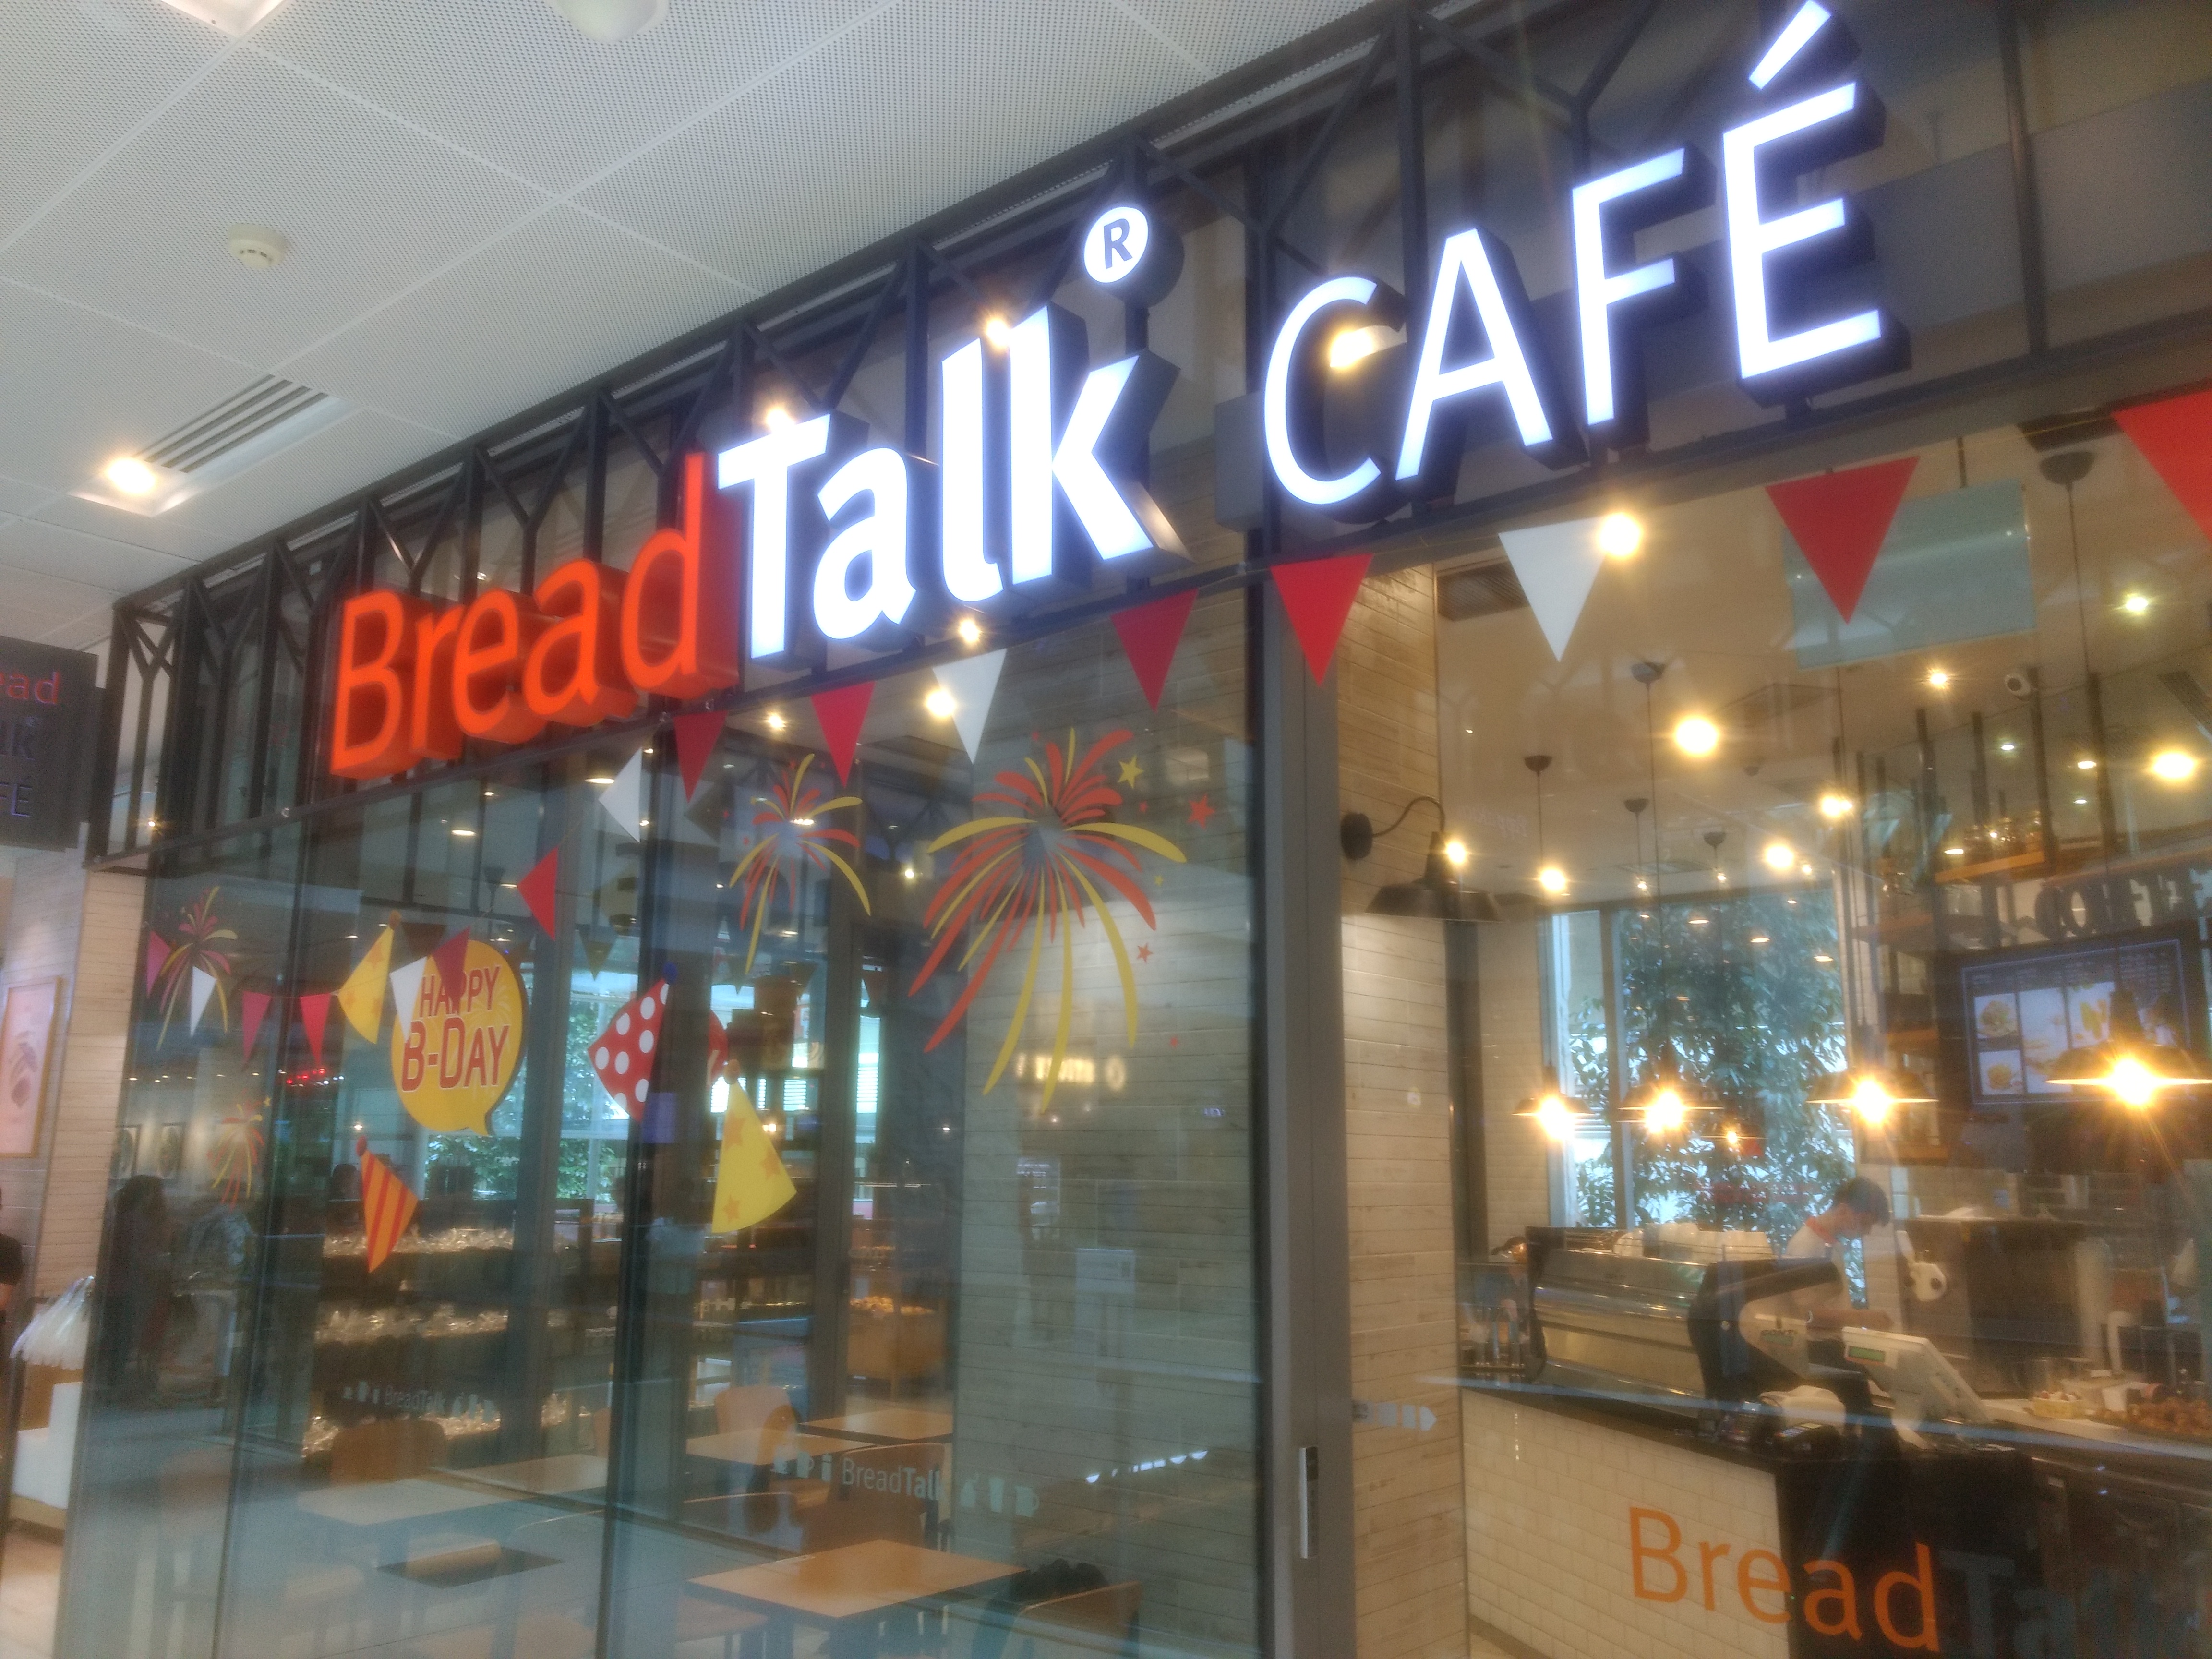 Bread Talk Cafe, Singapore